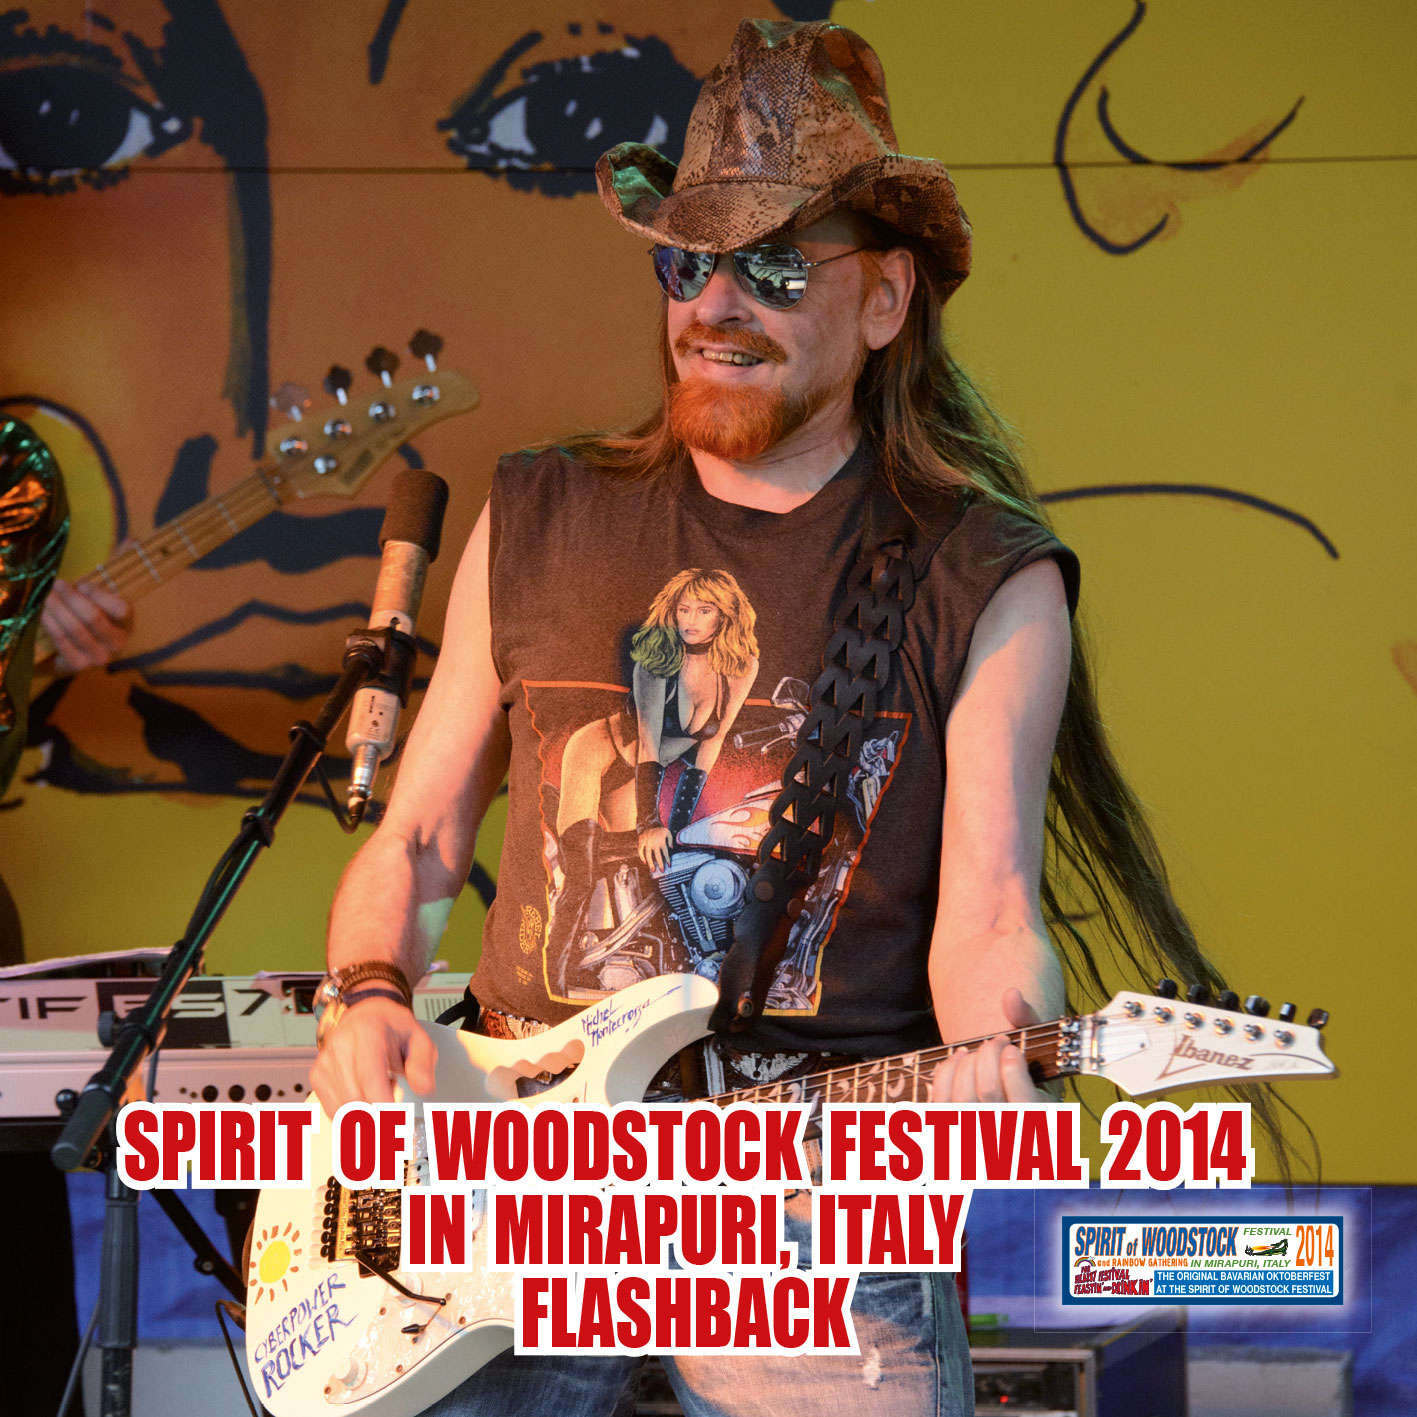 Flashback Of The Spirit Of Woodstock Festival 2014 In Mirapuri, Italy